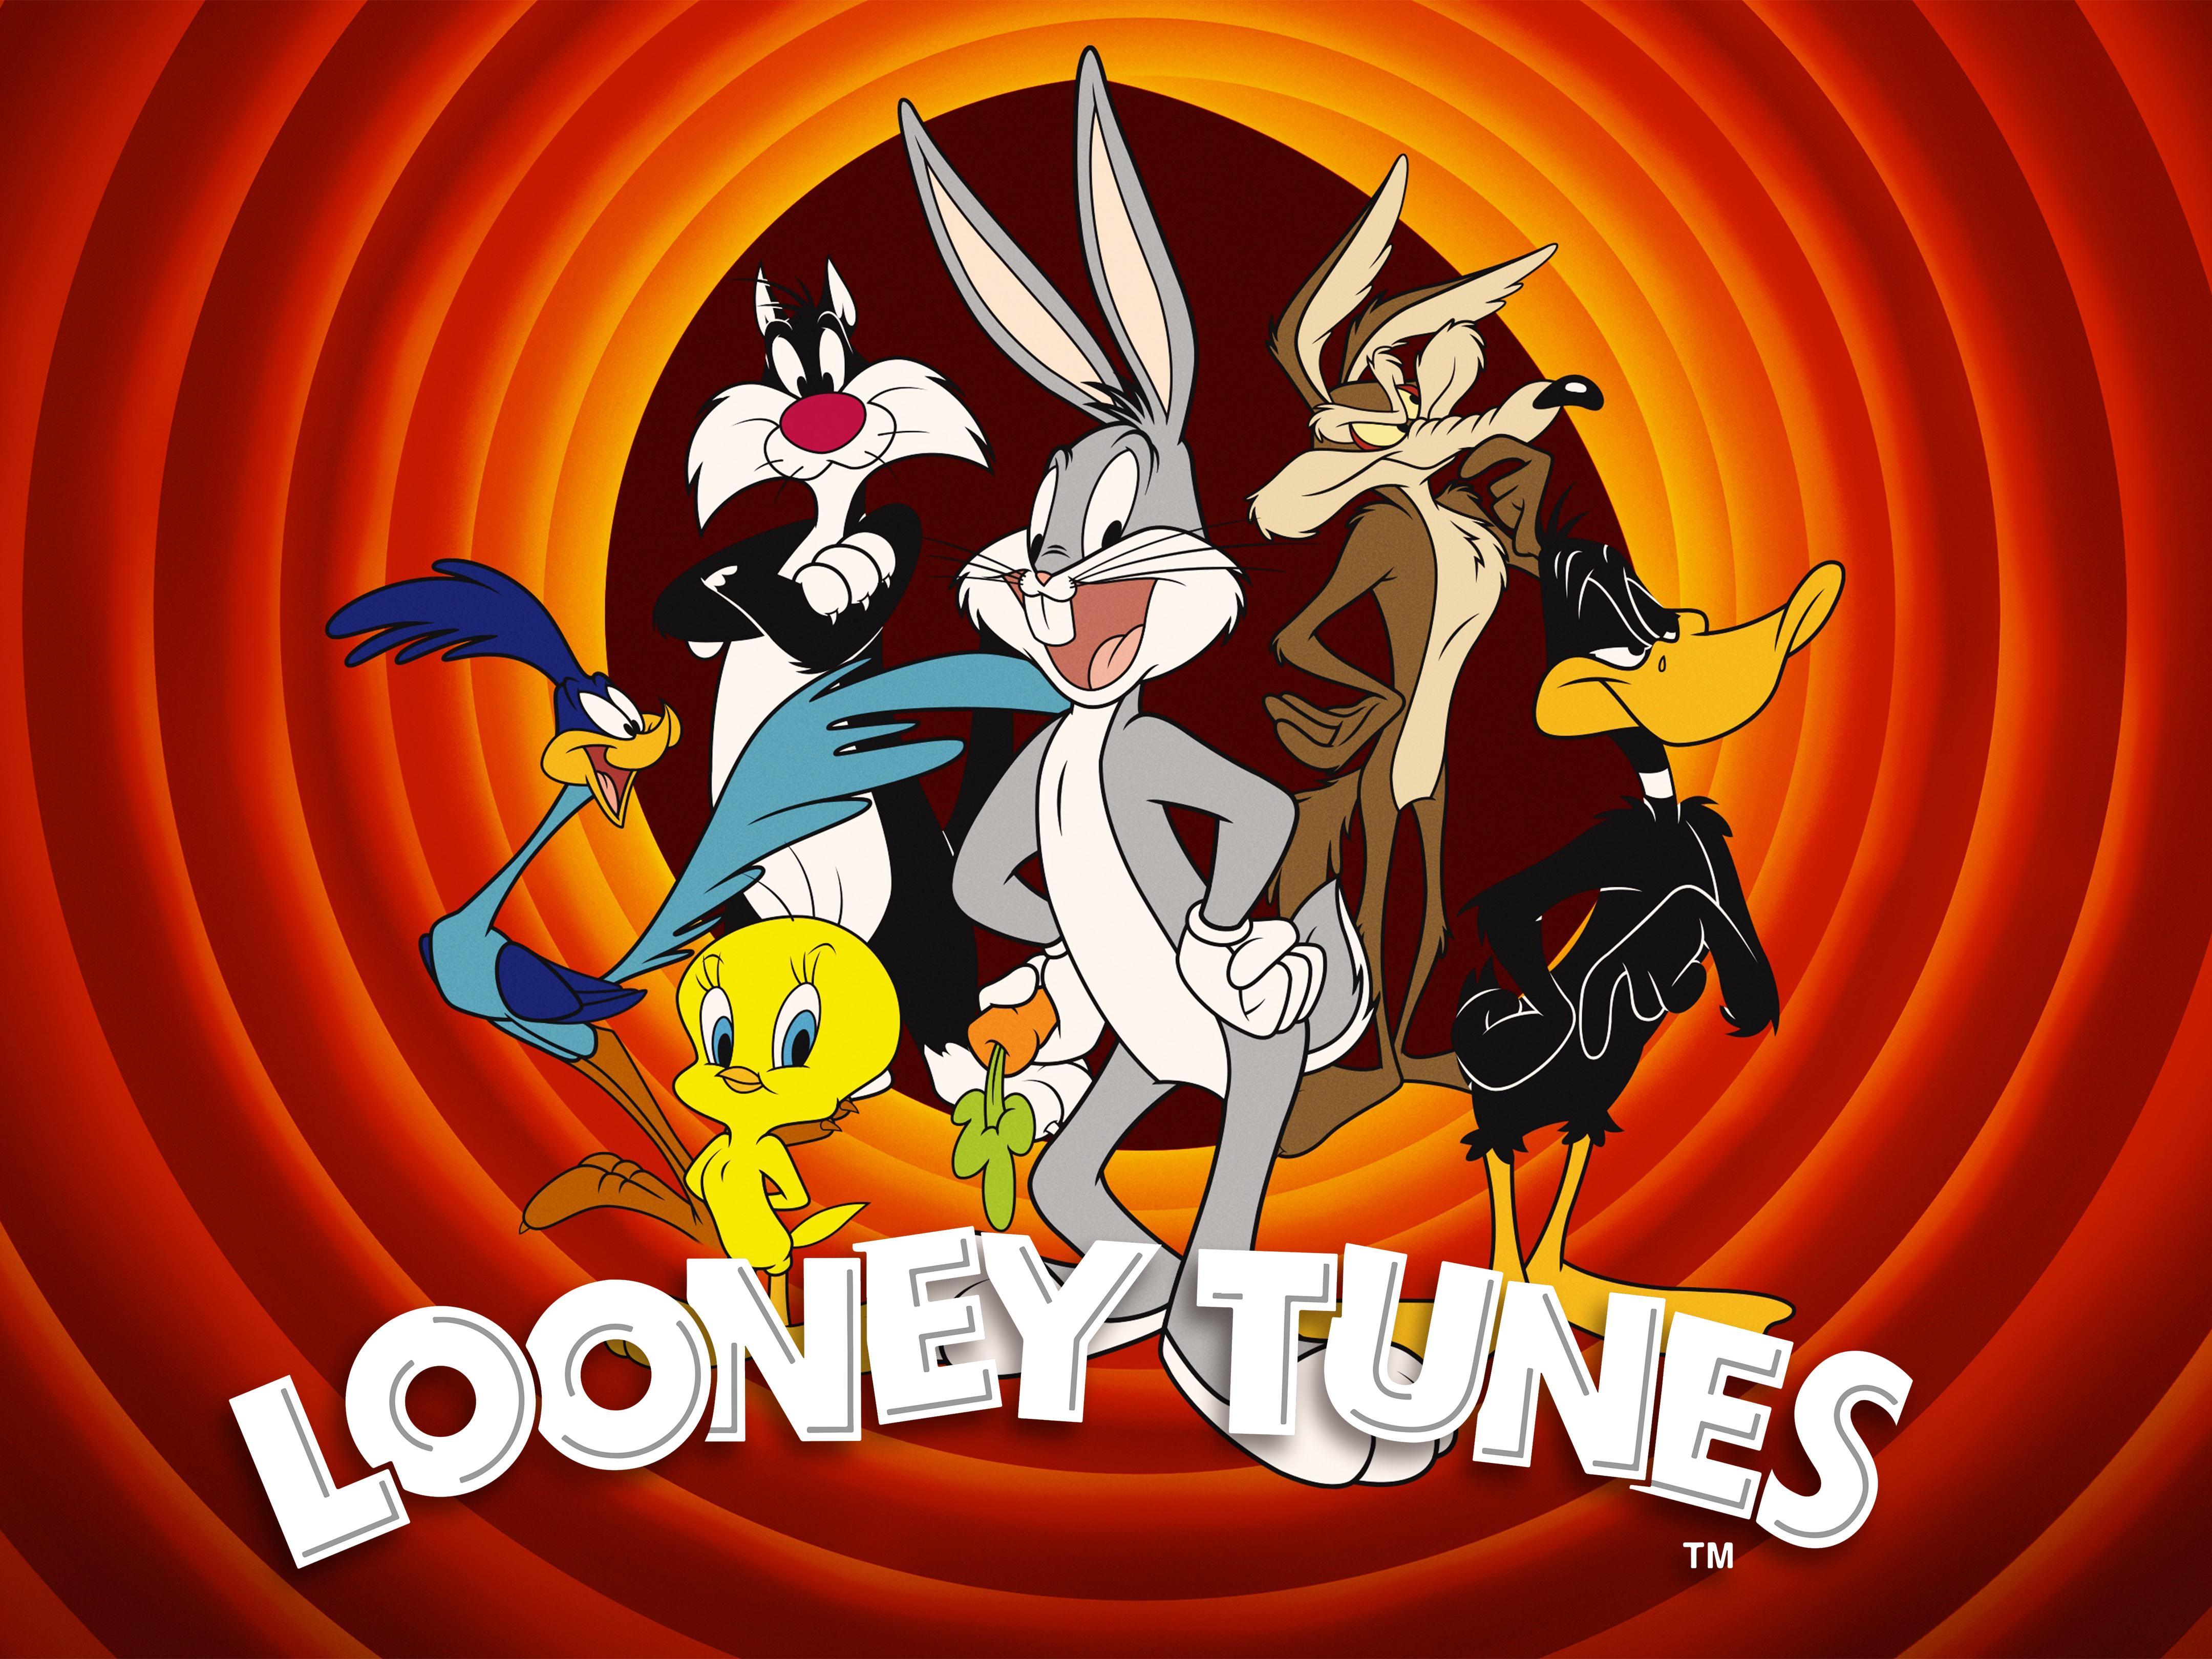 130+] Looney Tunes Wallpapers